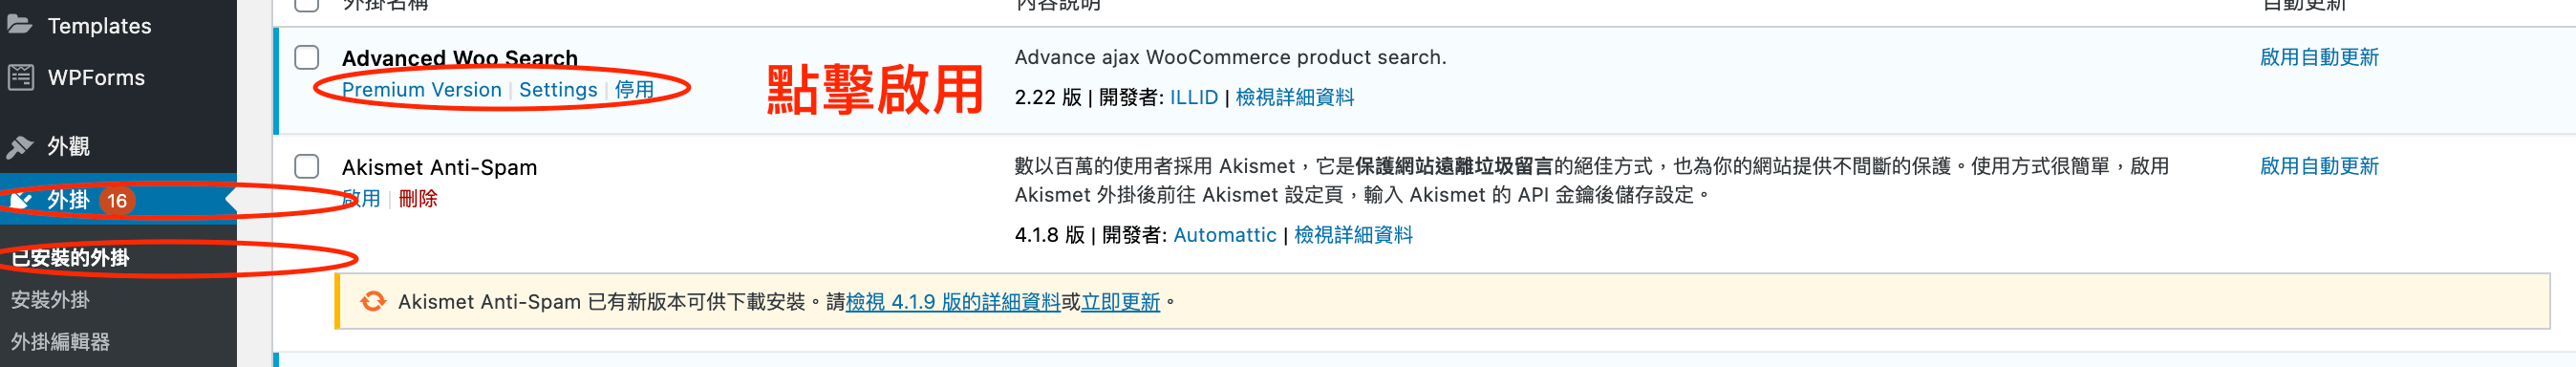 Advanced Woo Search